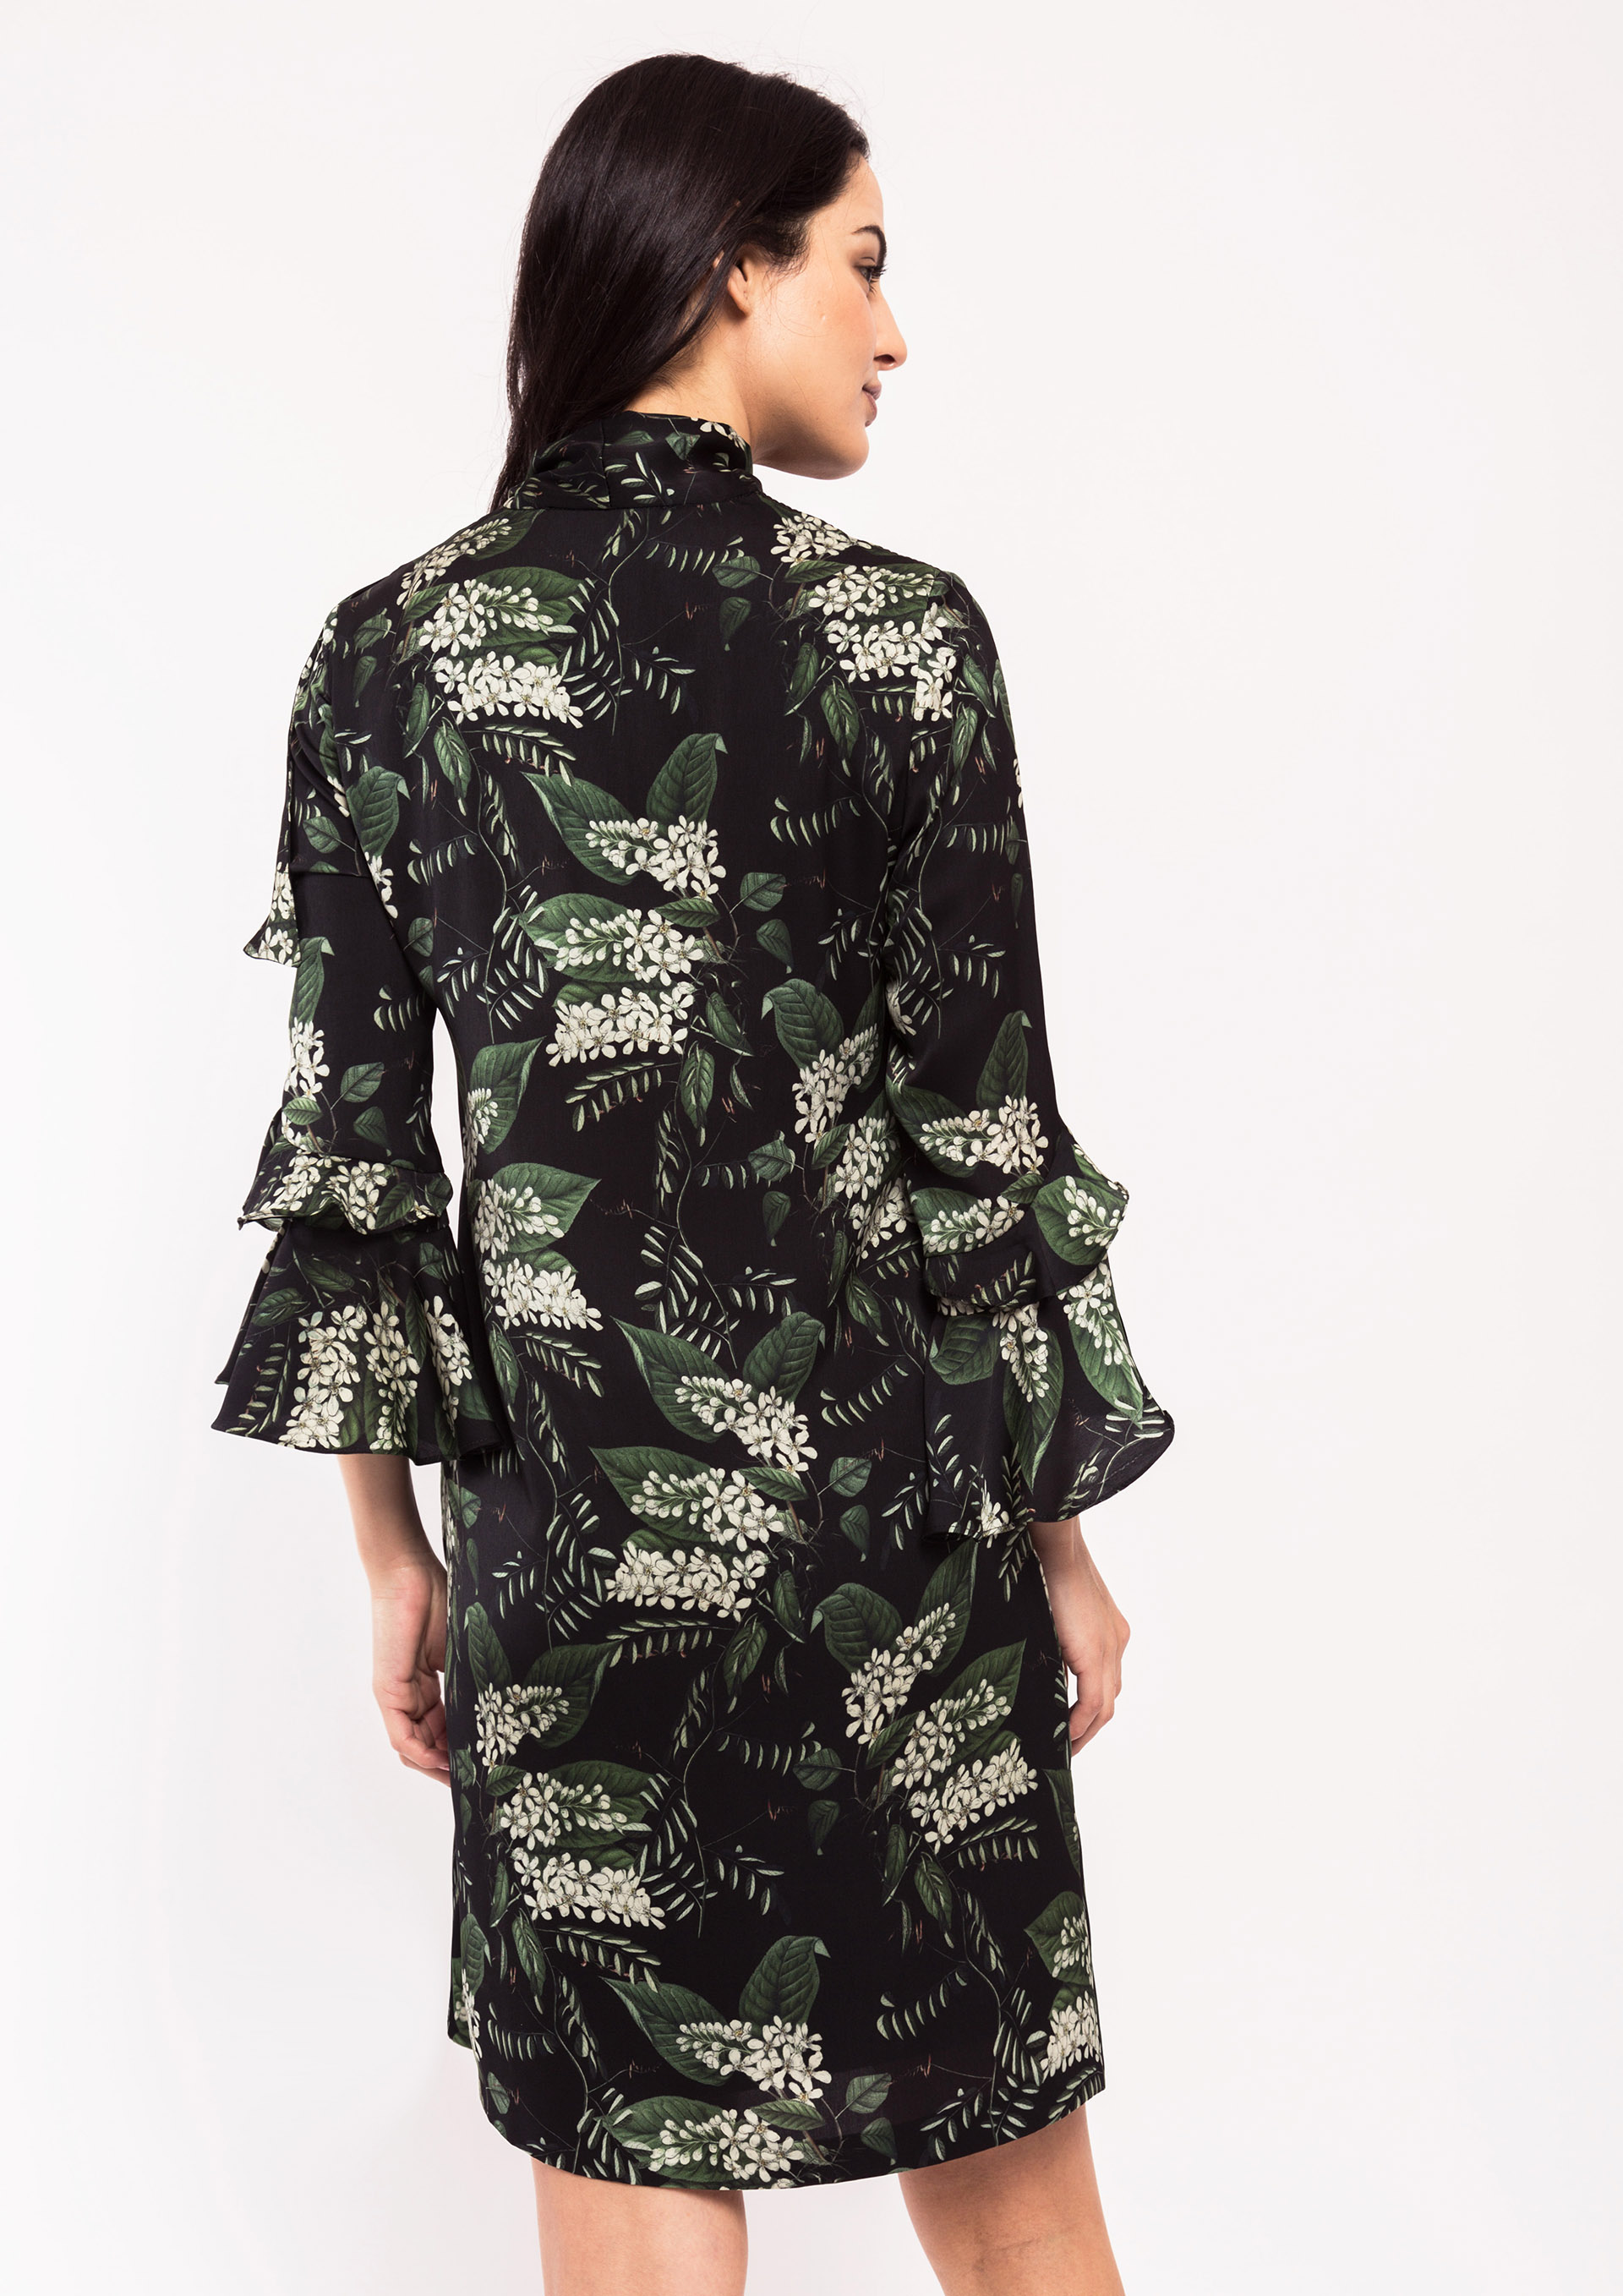 Short dress with green floral print dress